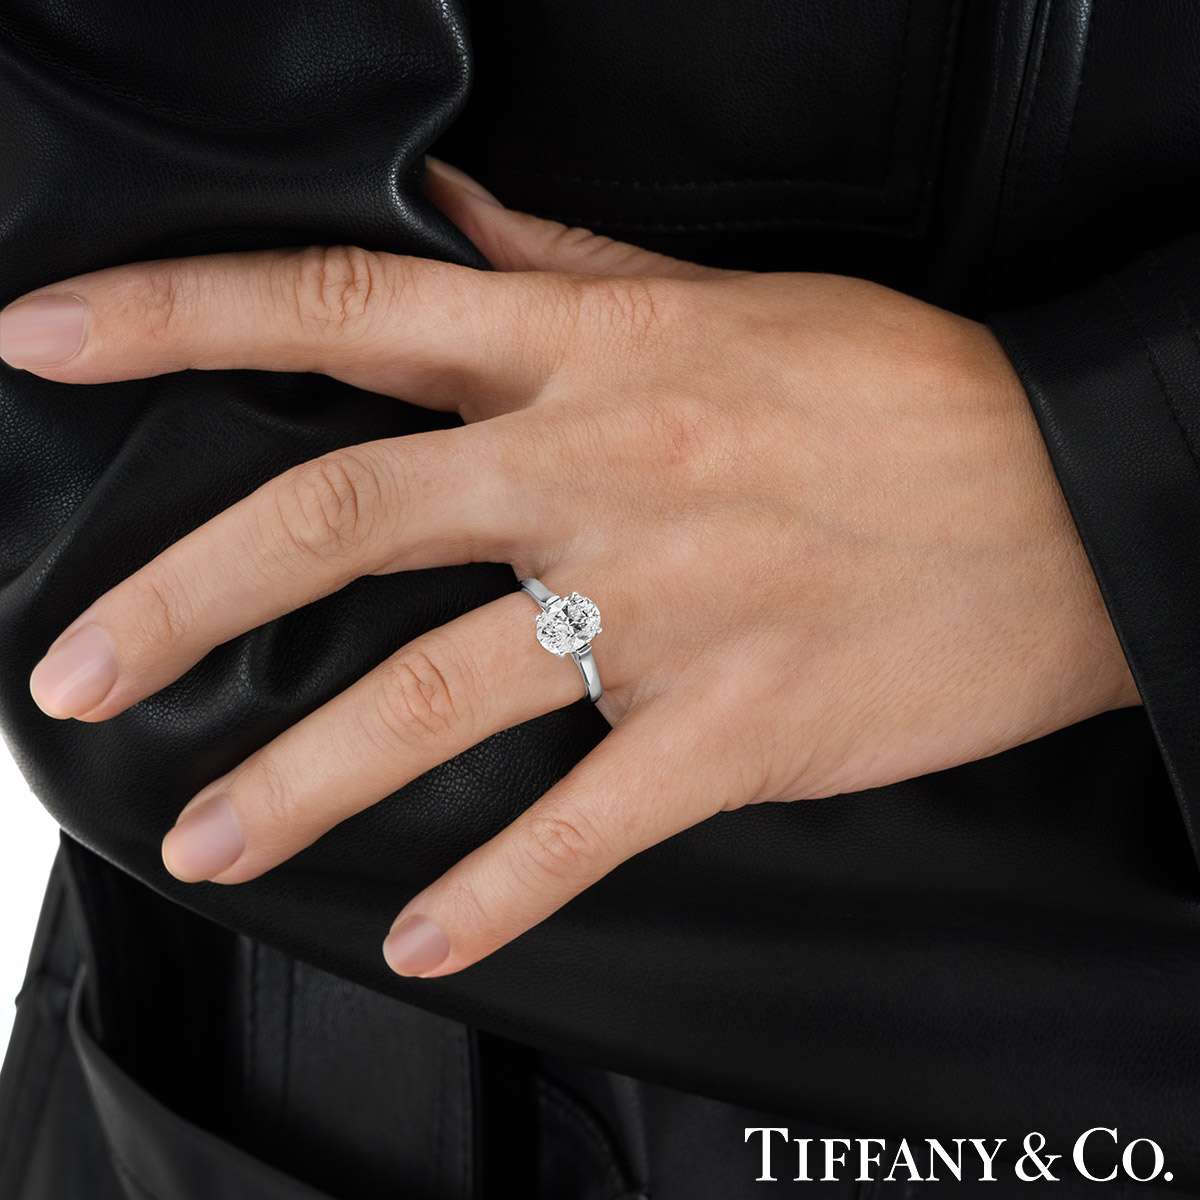 Tiffany & Co. Platinum Oval Cut Diamond Ring 2.06ct D/VVS2